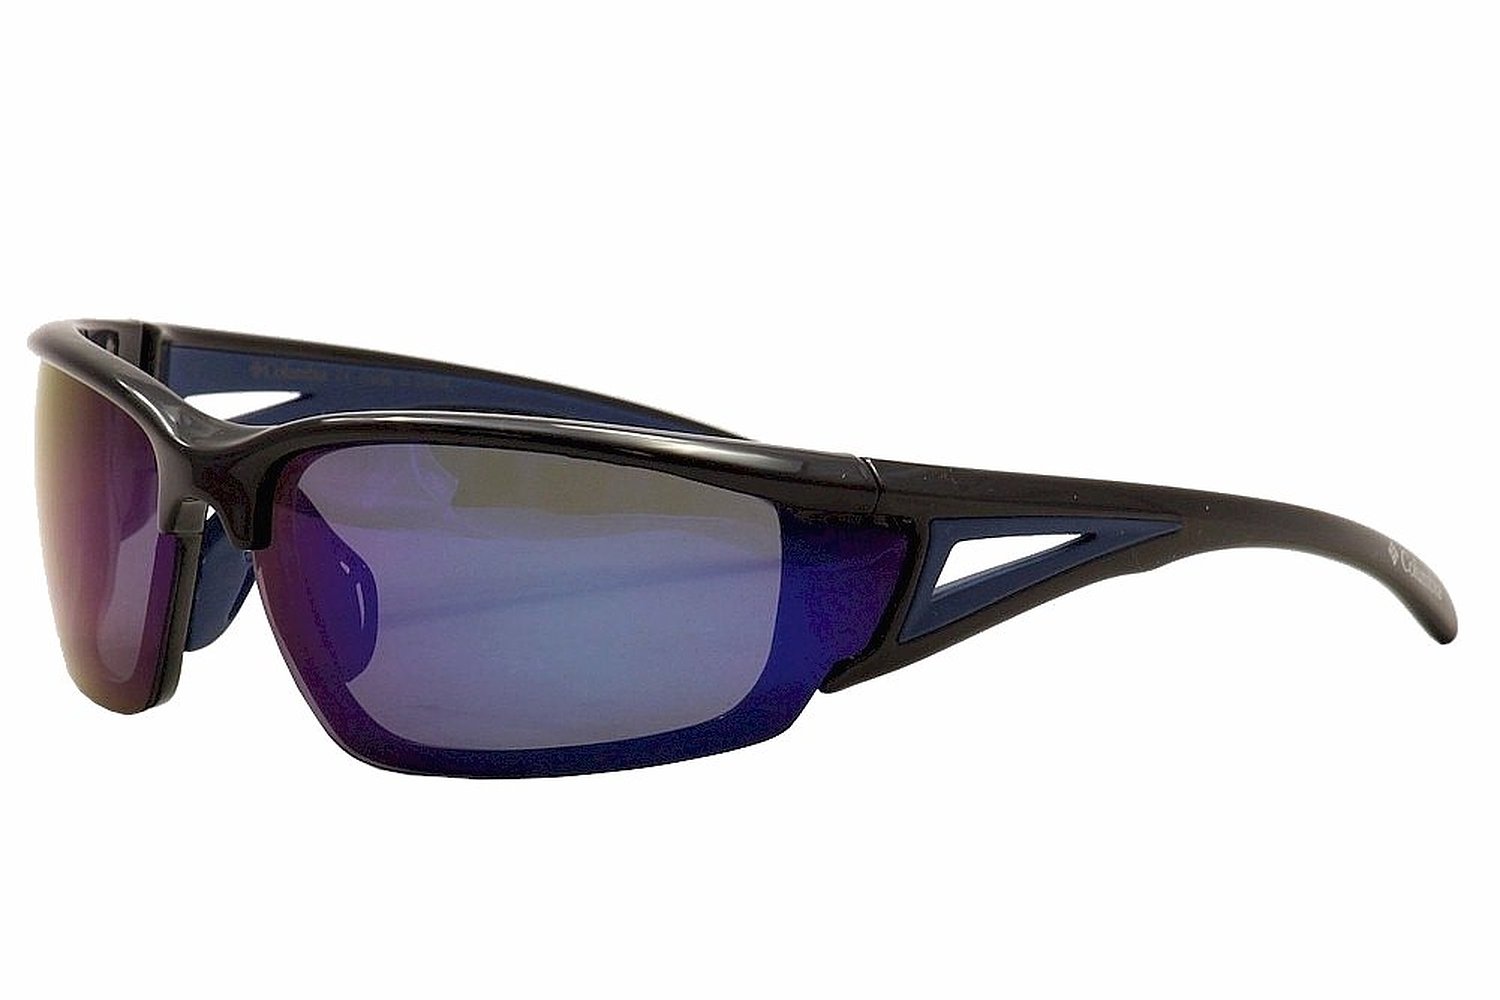 Columbia Unisex 402 Shiny Black and Blue Sunglasses